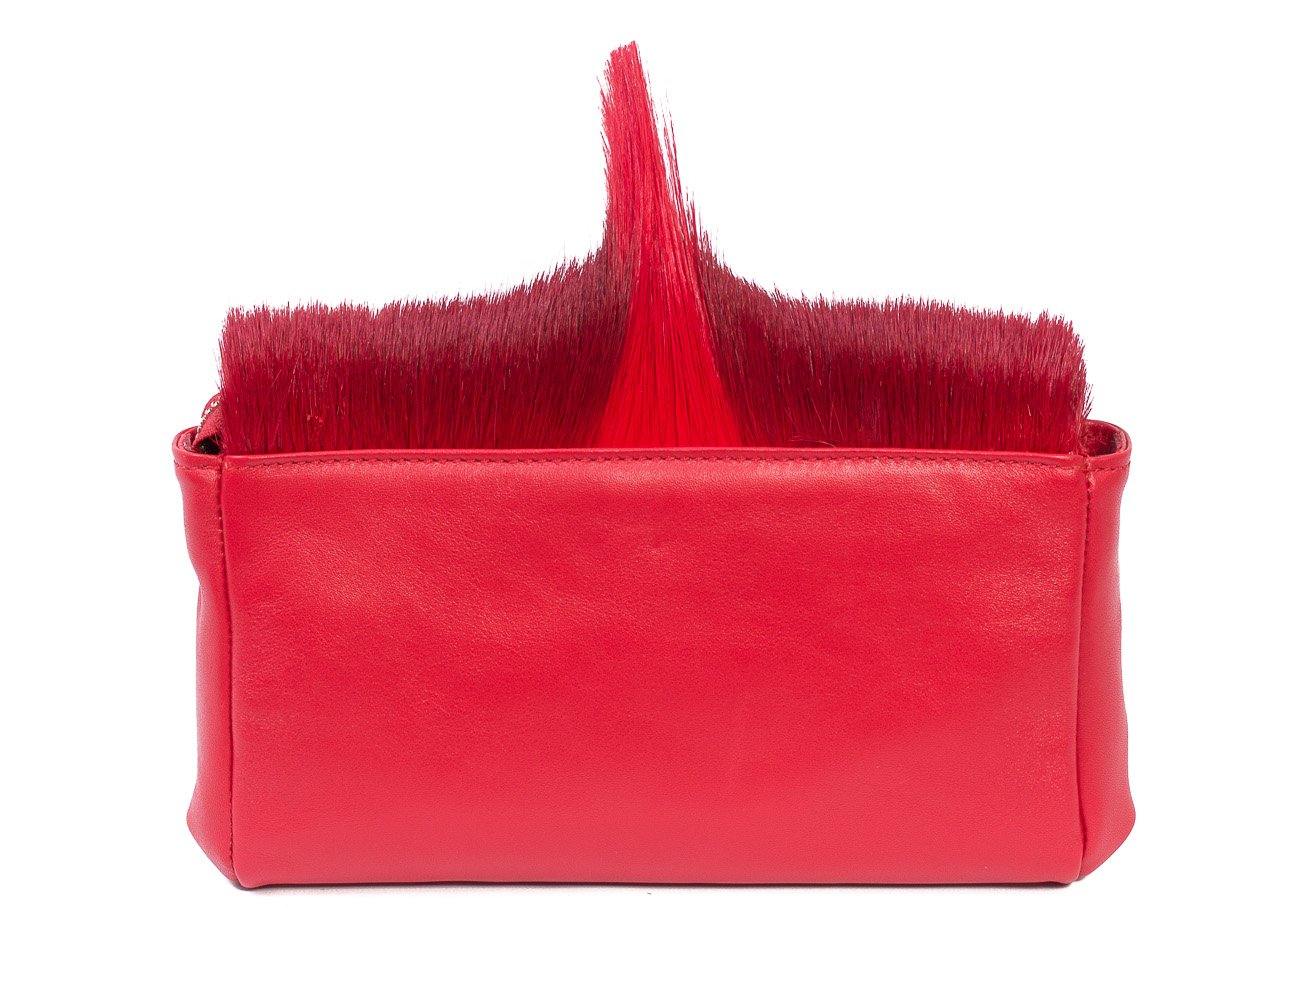 sherene melinda springbok hair-on-hide red leather Sophy SS18 Clutch Bag Fan back